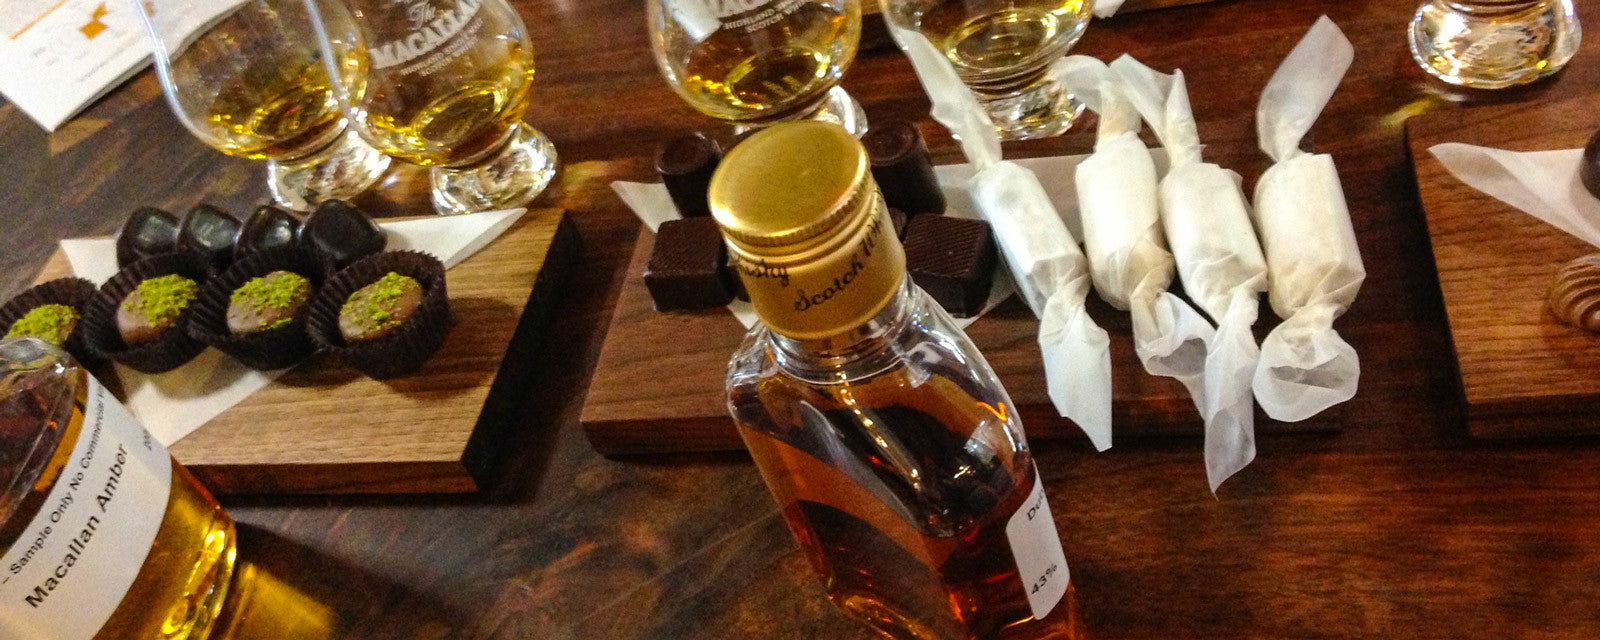 The Macallan- whisky pairings